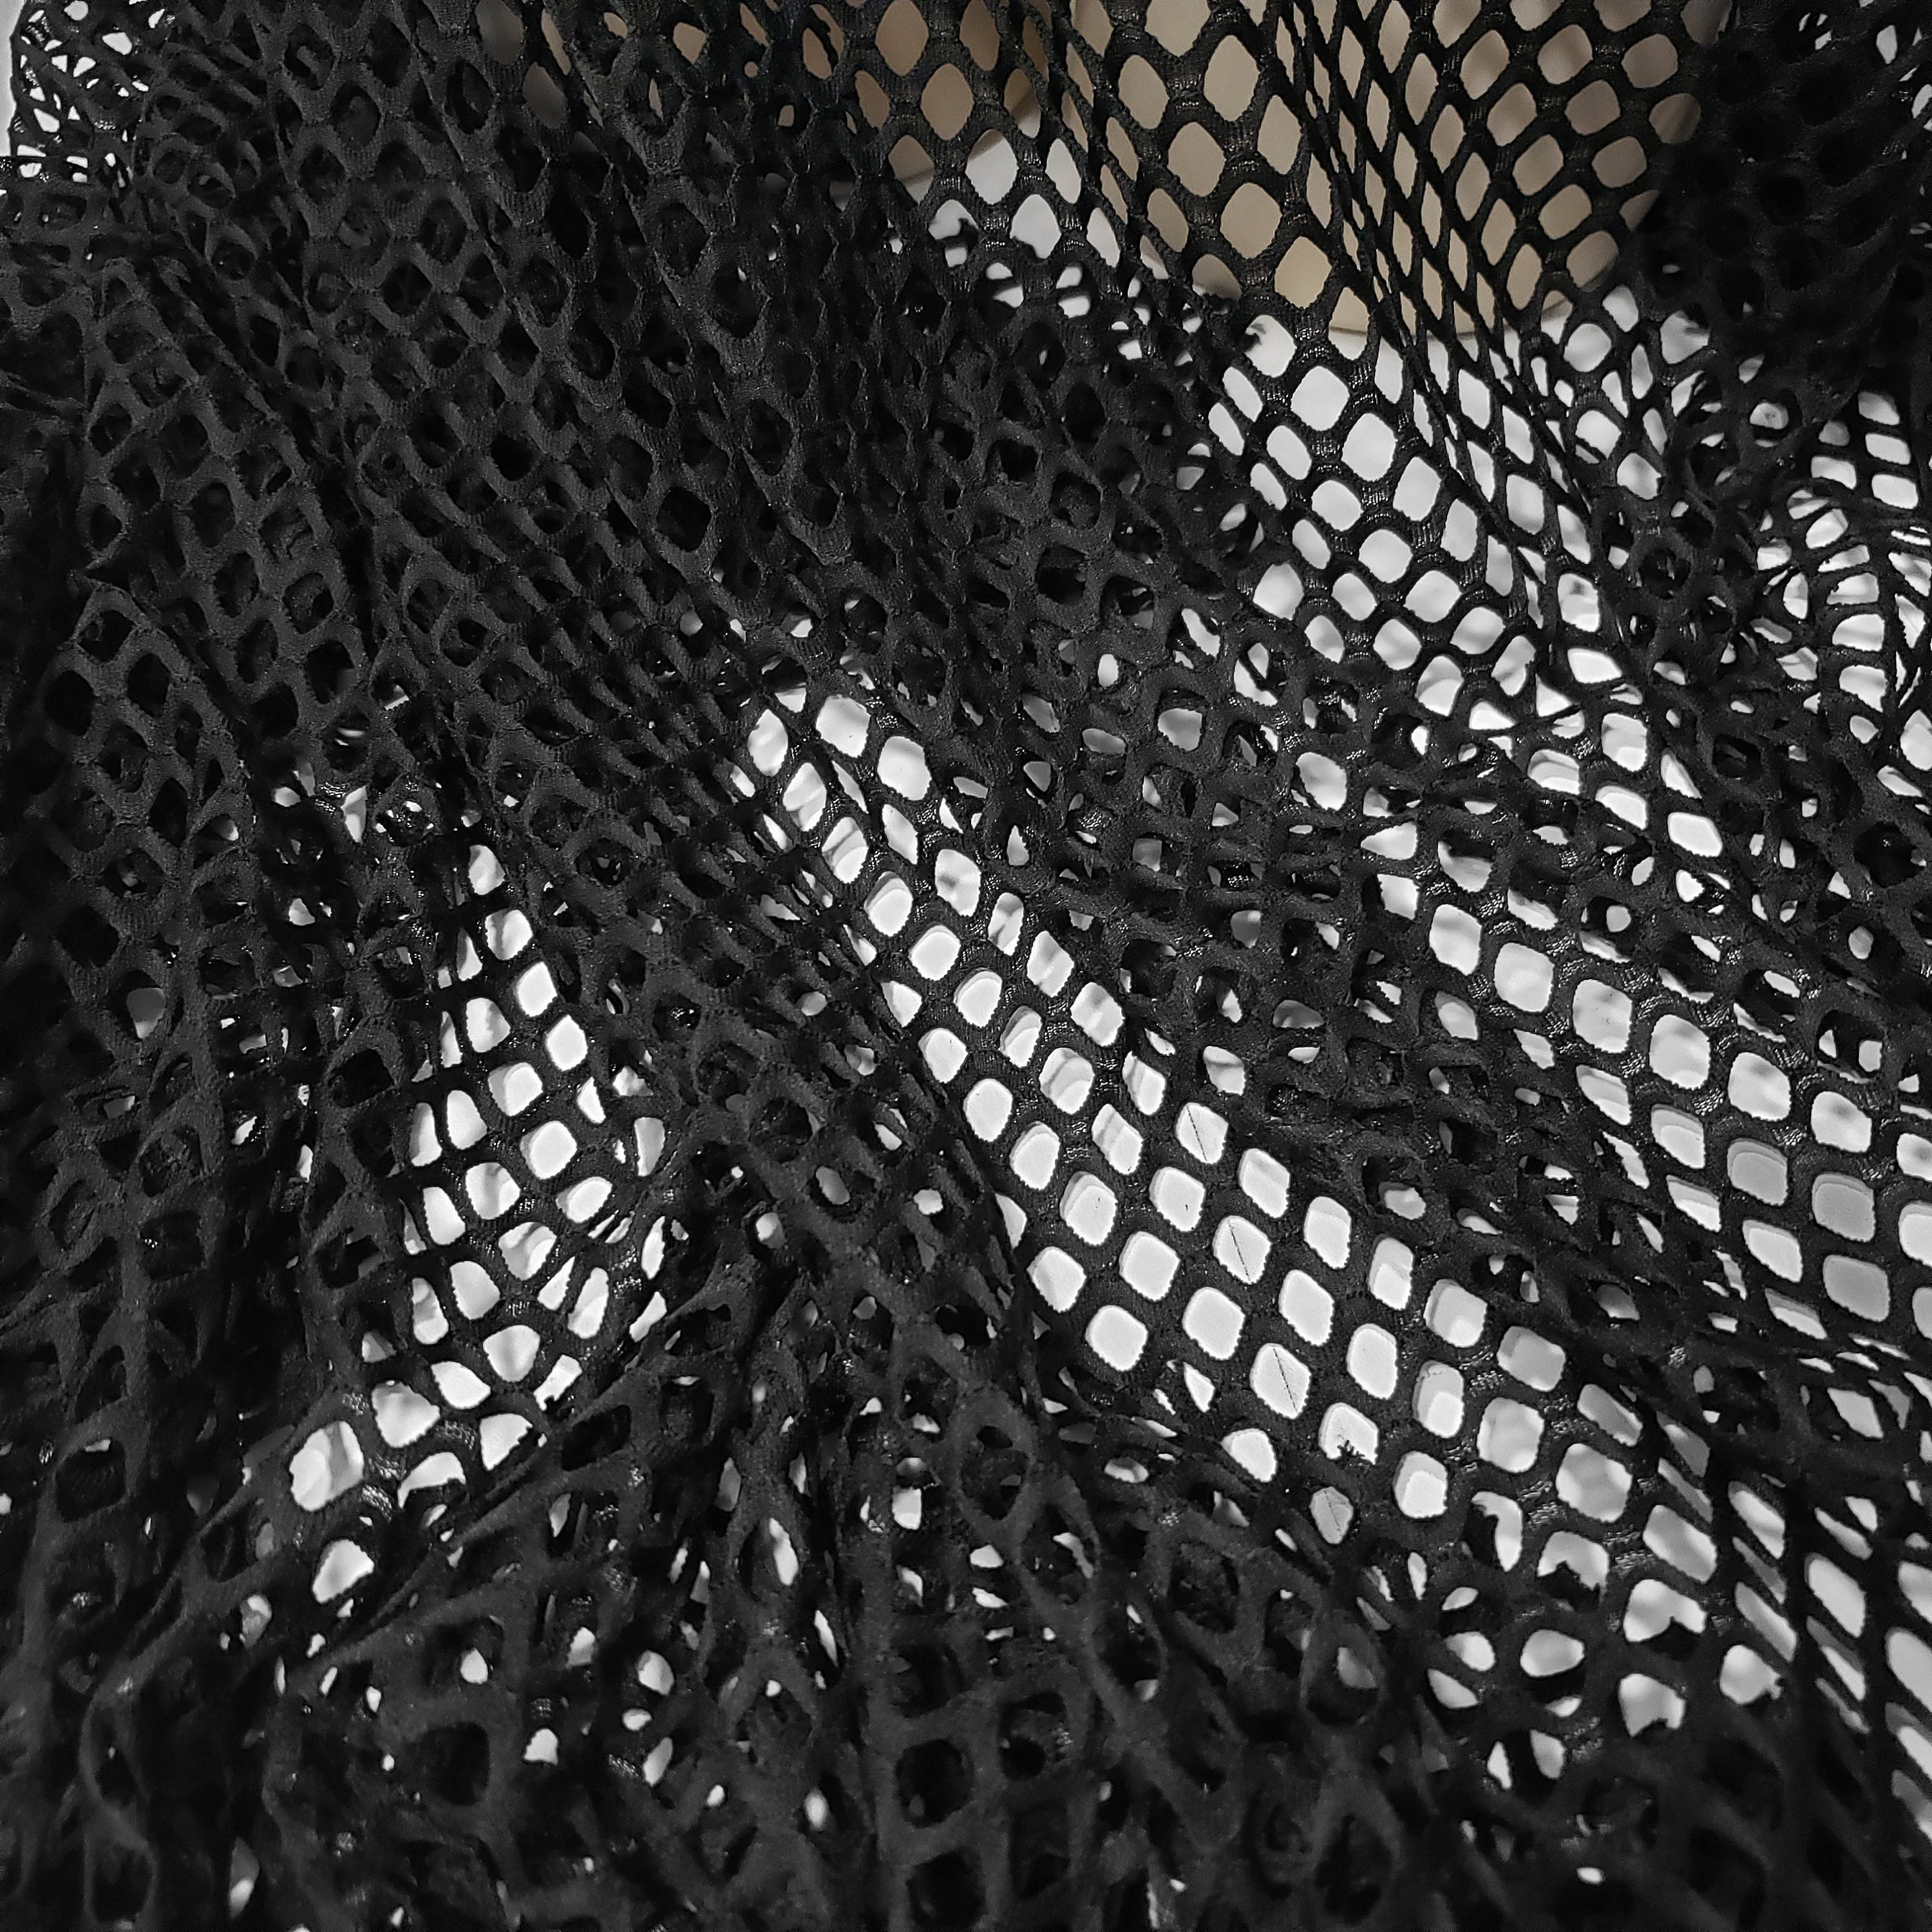 Versatile Black Fishnet Fabric With Diamond-shaped Holes Perfect